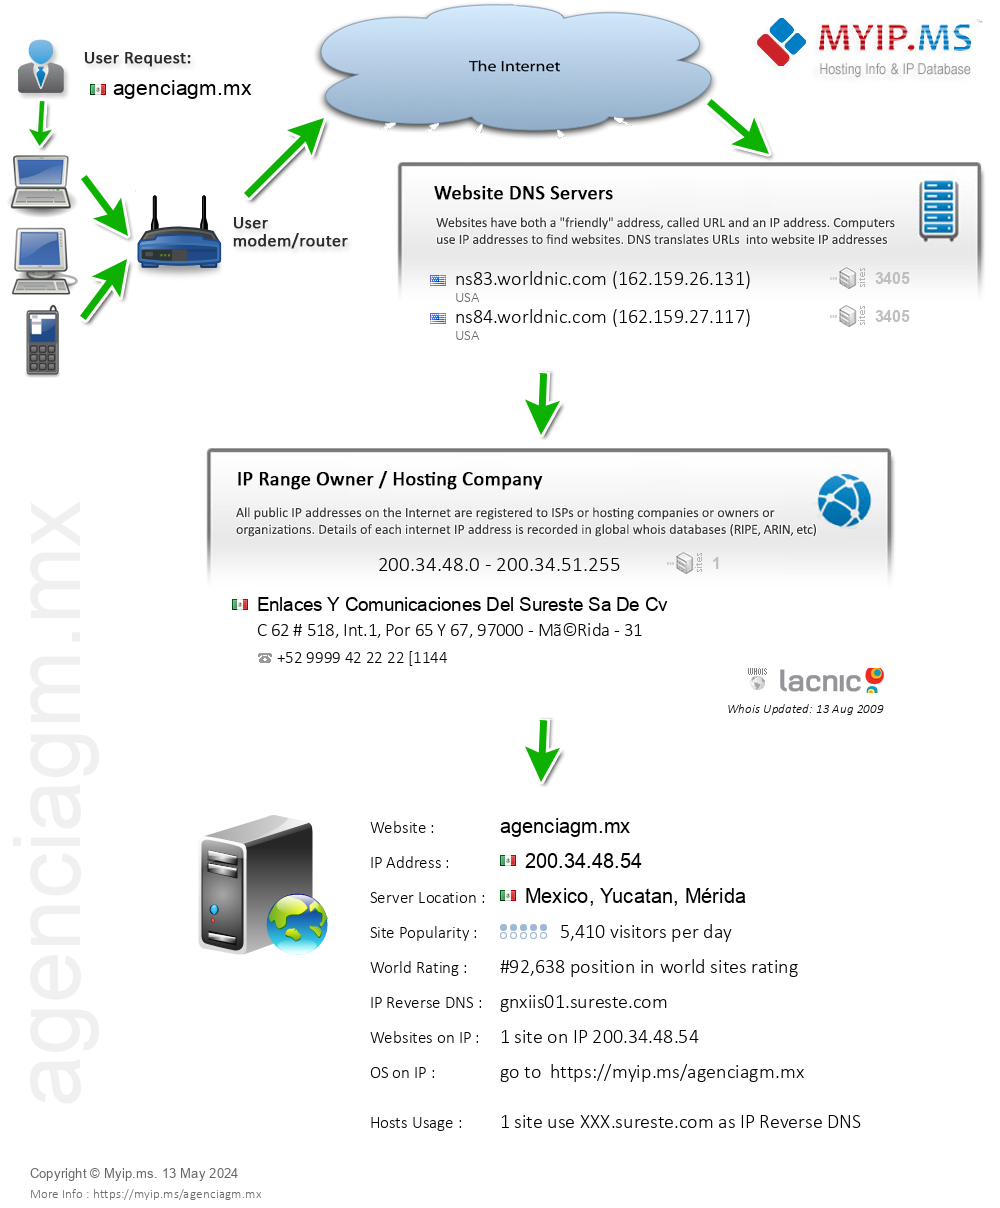 Agenciagm.mx - Website Hosting Visual IP Diagram